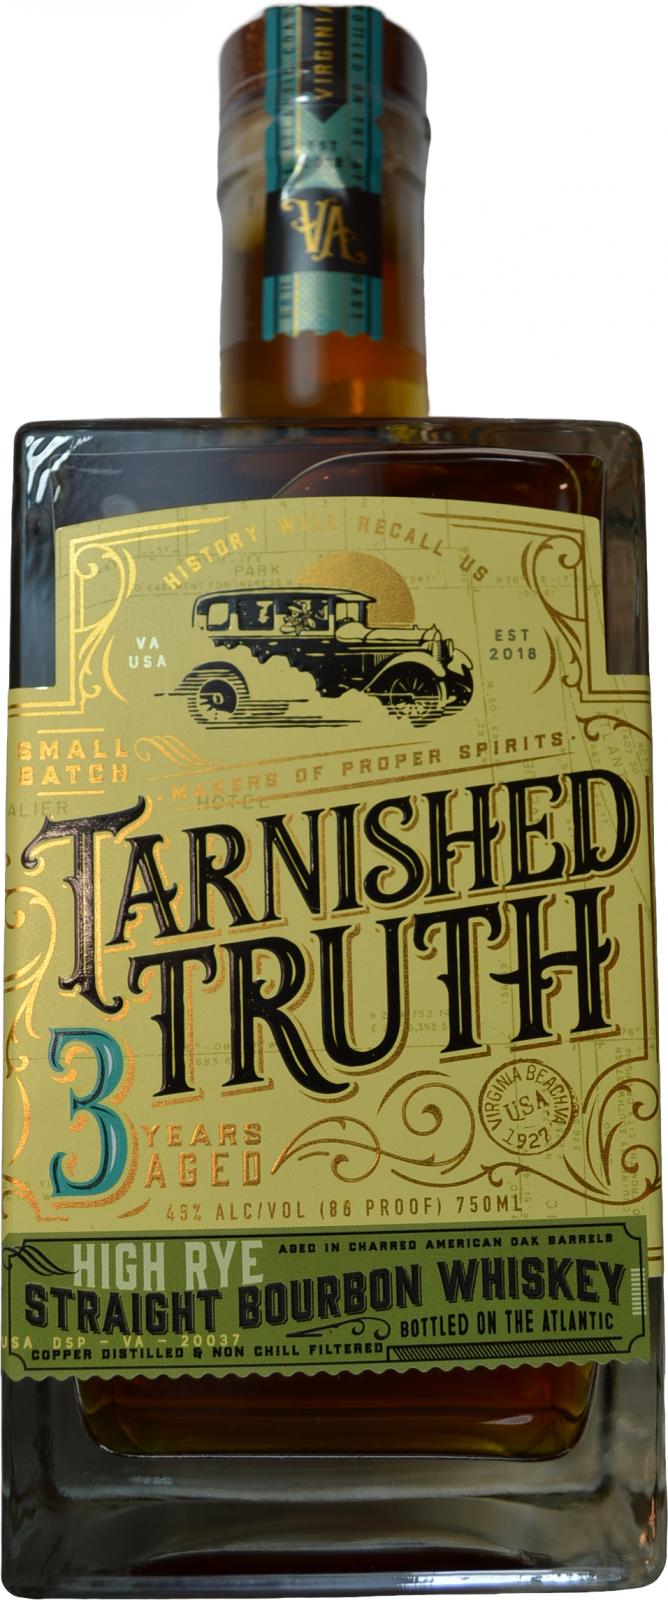 Tarnished Truth 3yo High Rye Straight Bourbon Whisky Charred American Oak Barrels 43% 750ml